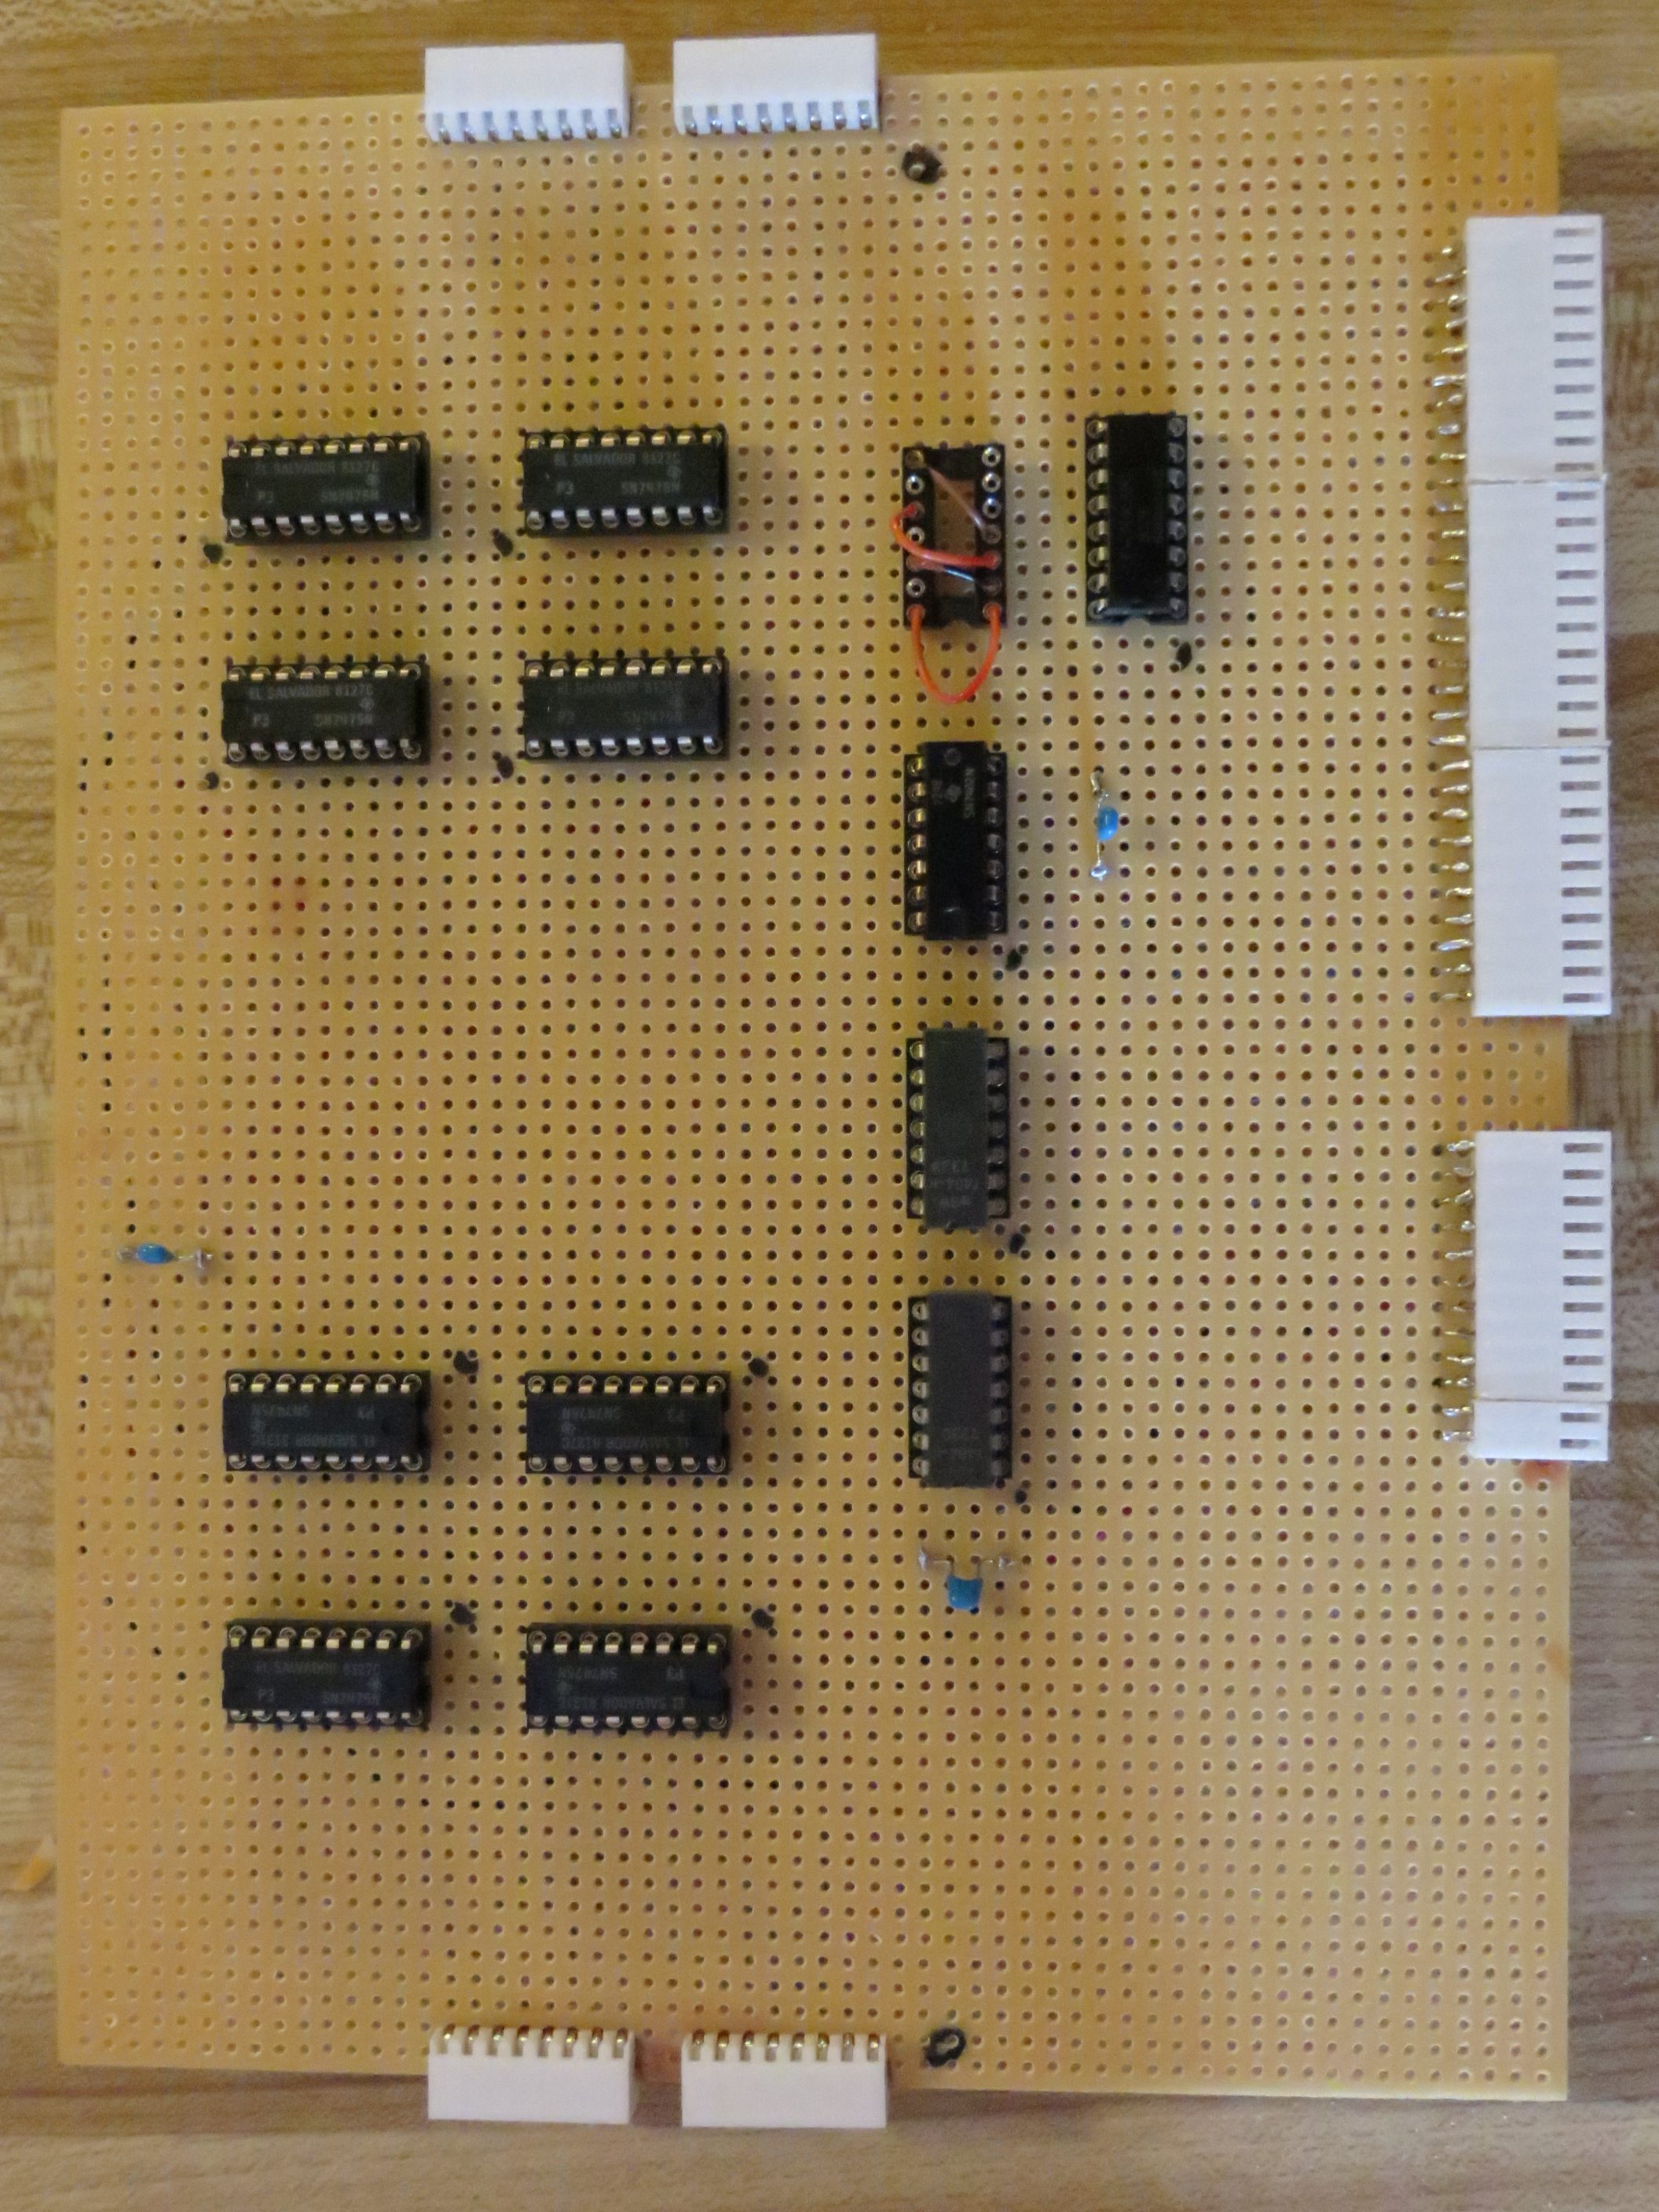 Mark 8 Prototype Output Ports Board